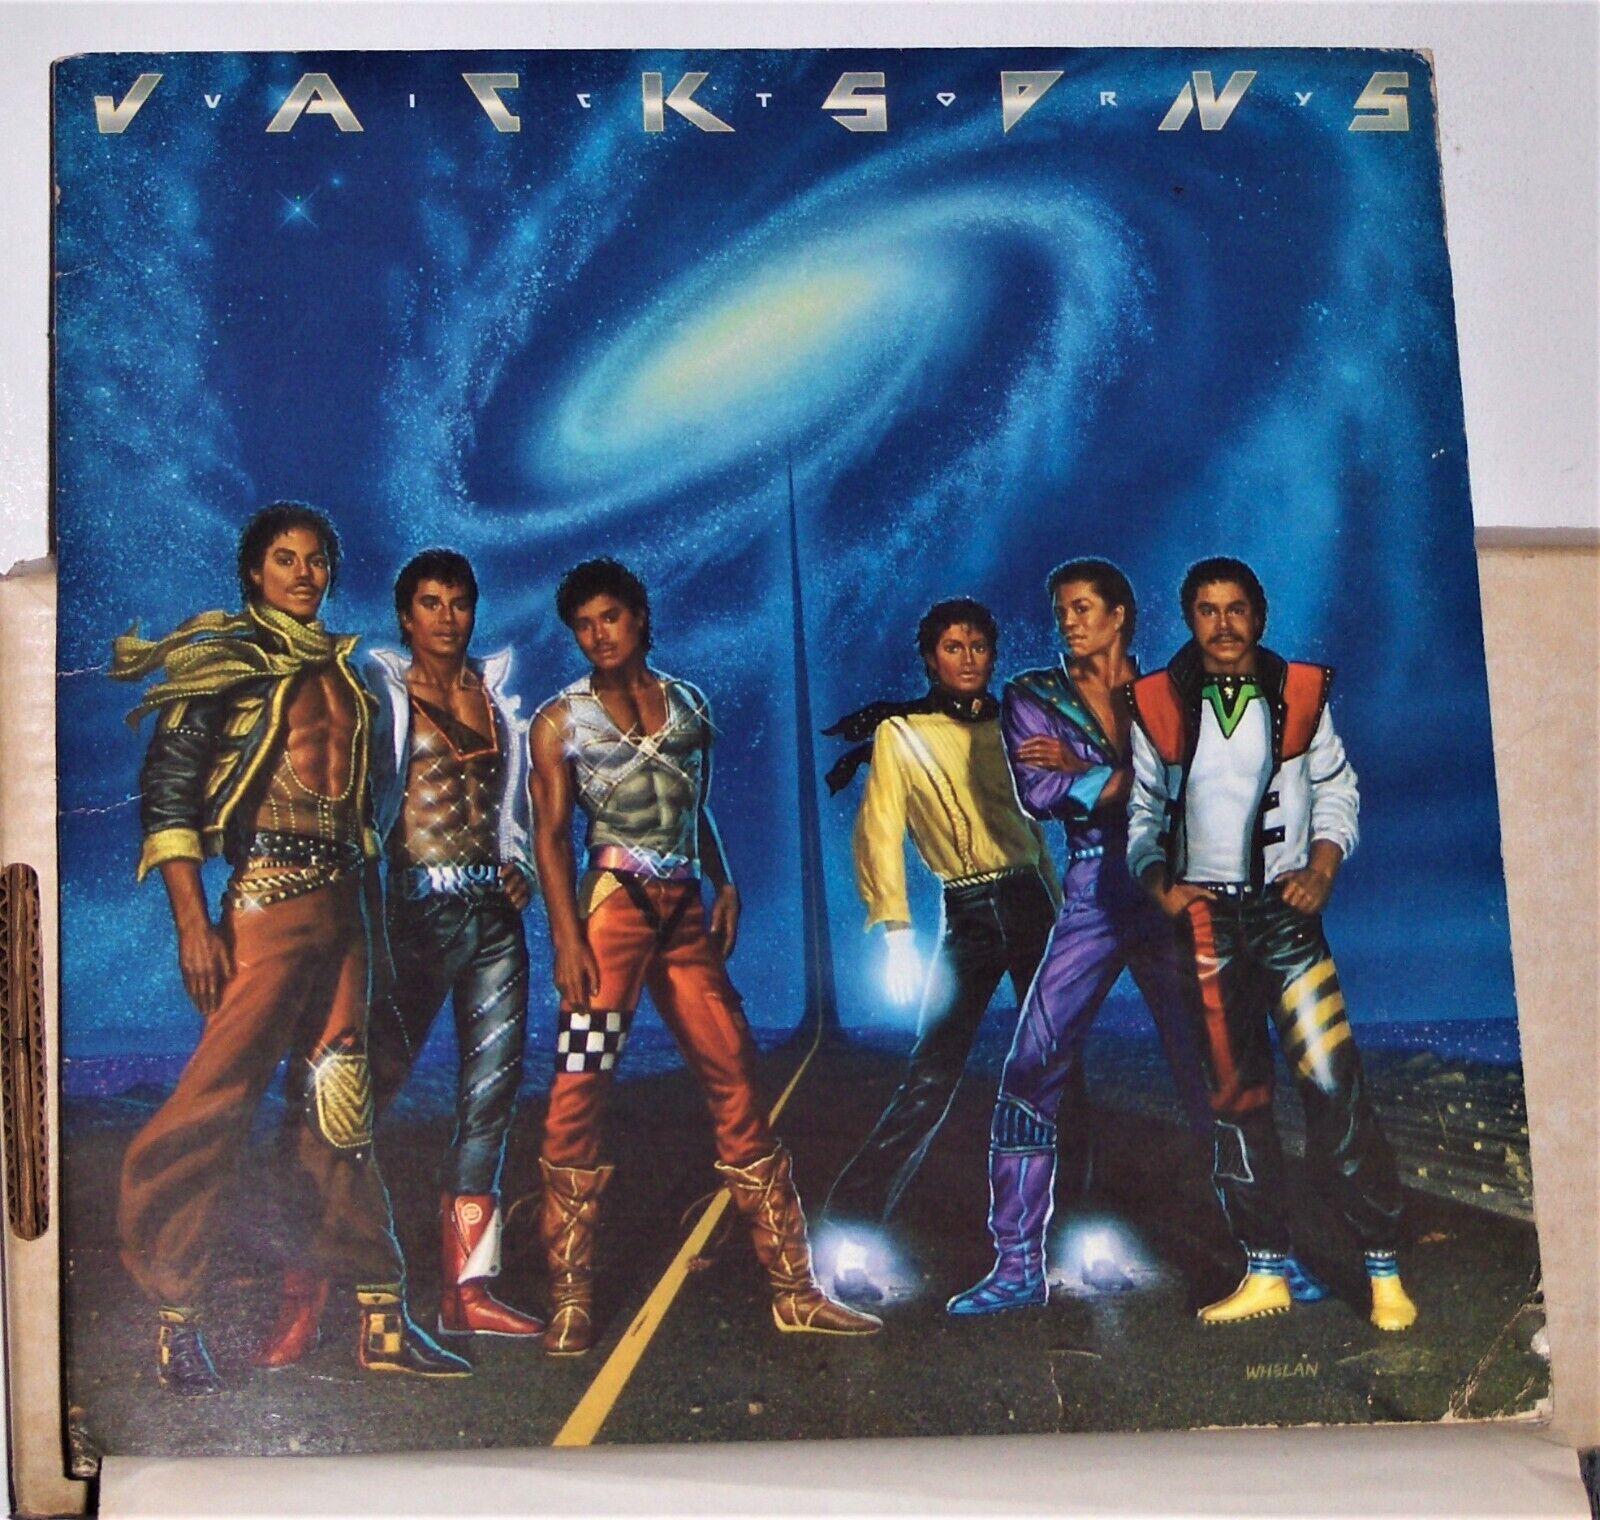 Jacksons – Victory - Original 1984 Vinyl LP Record Album